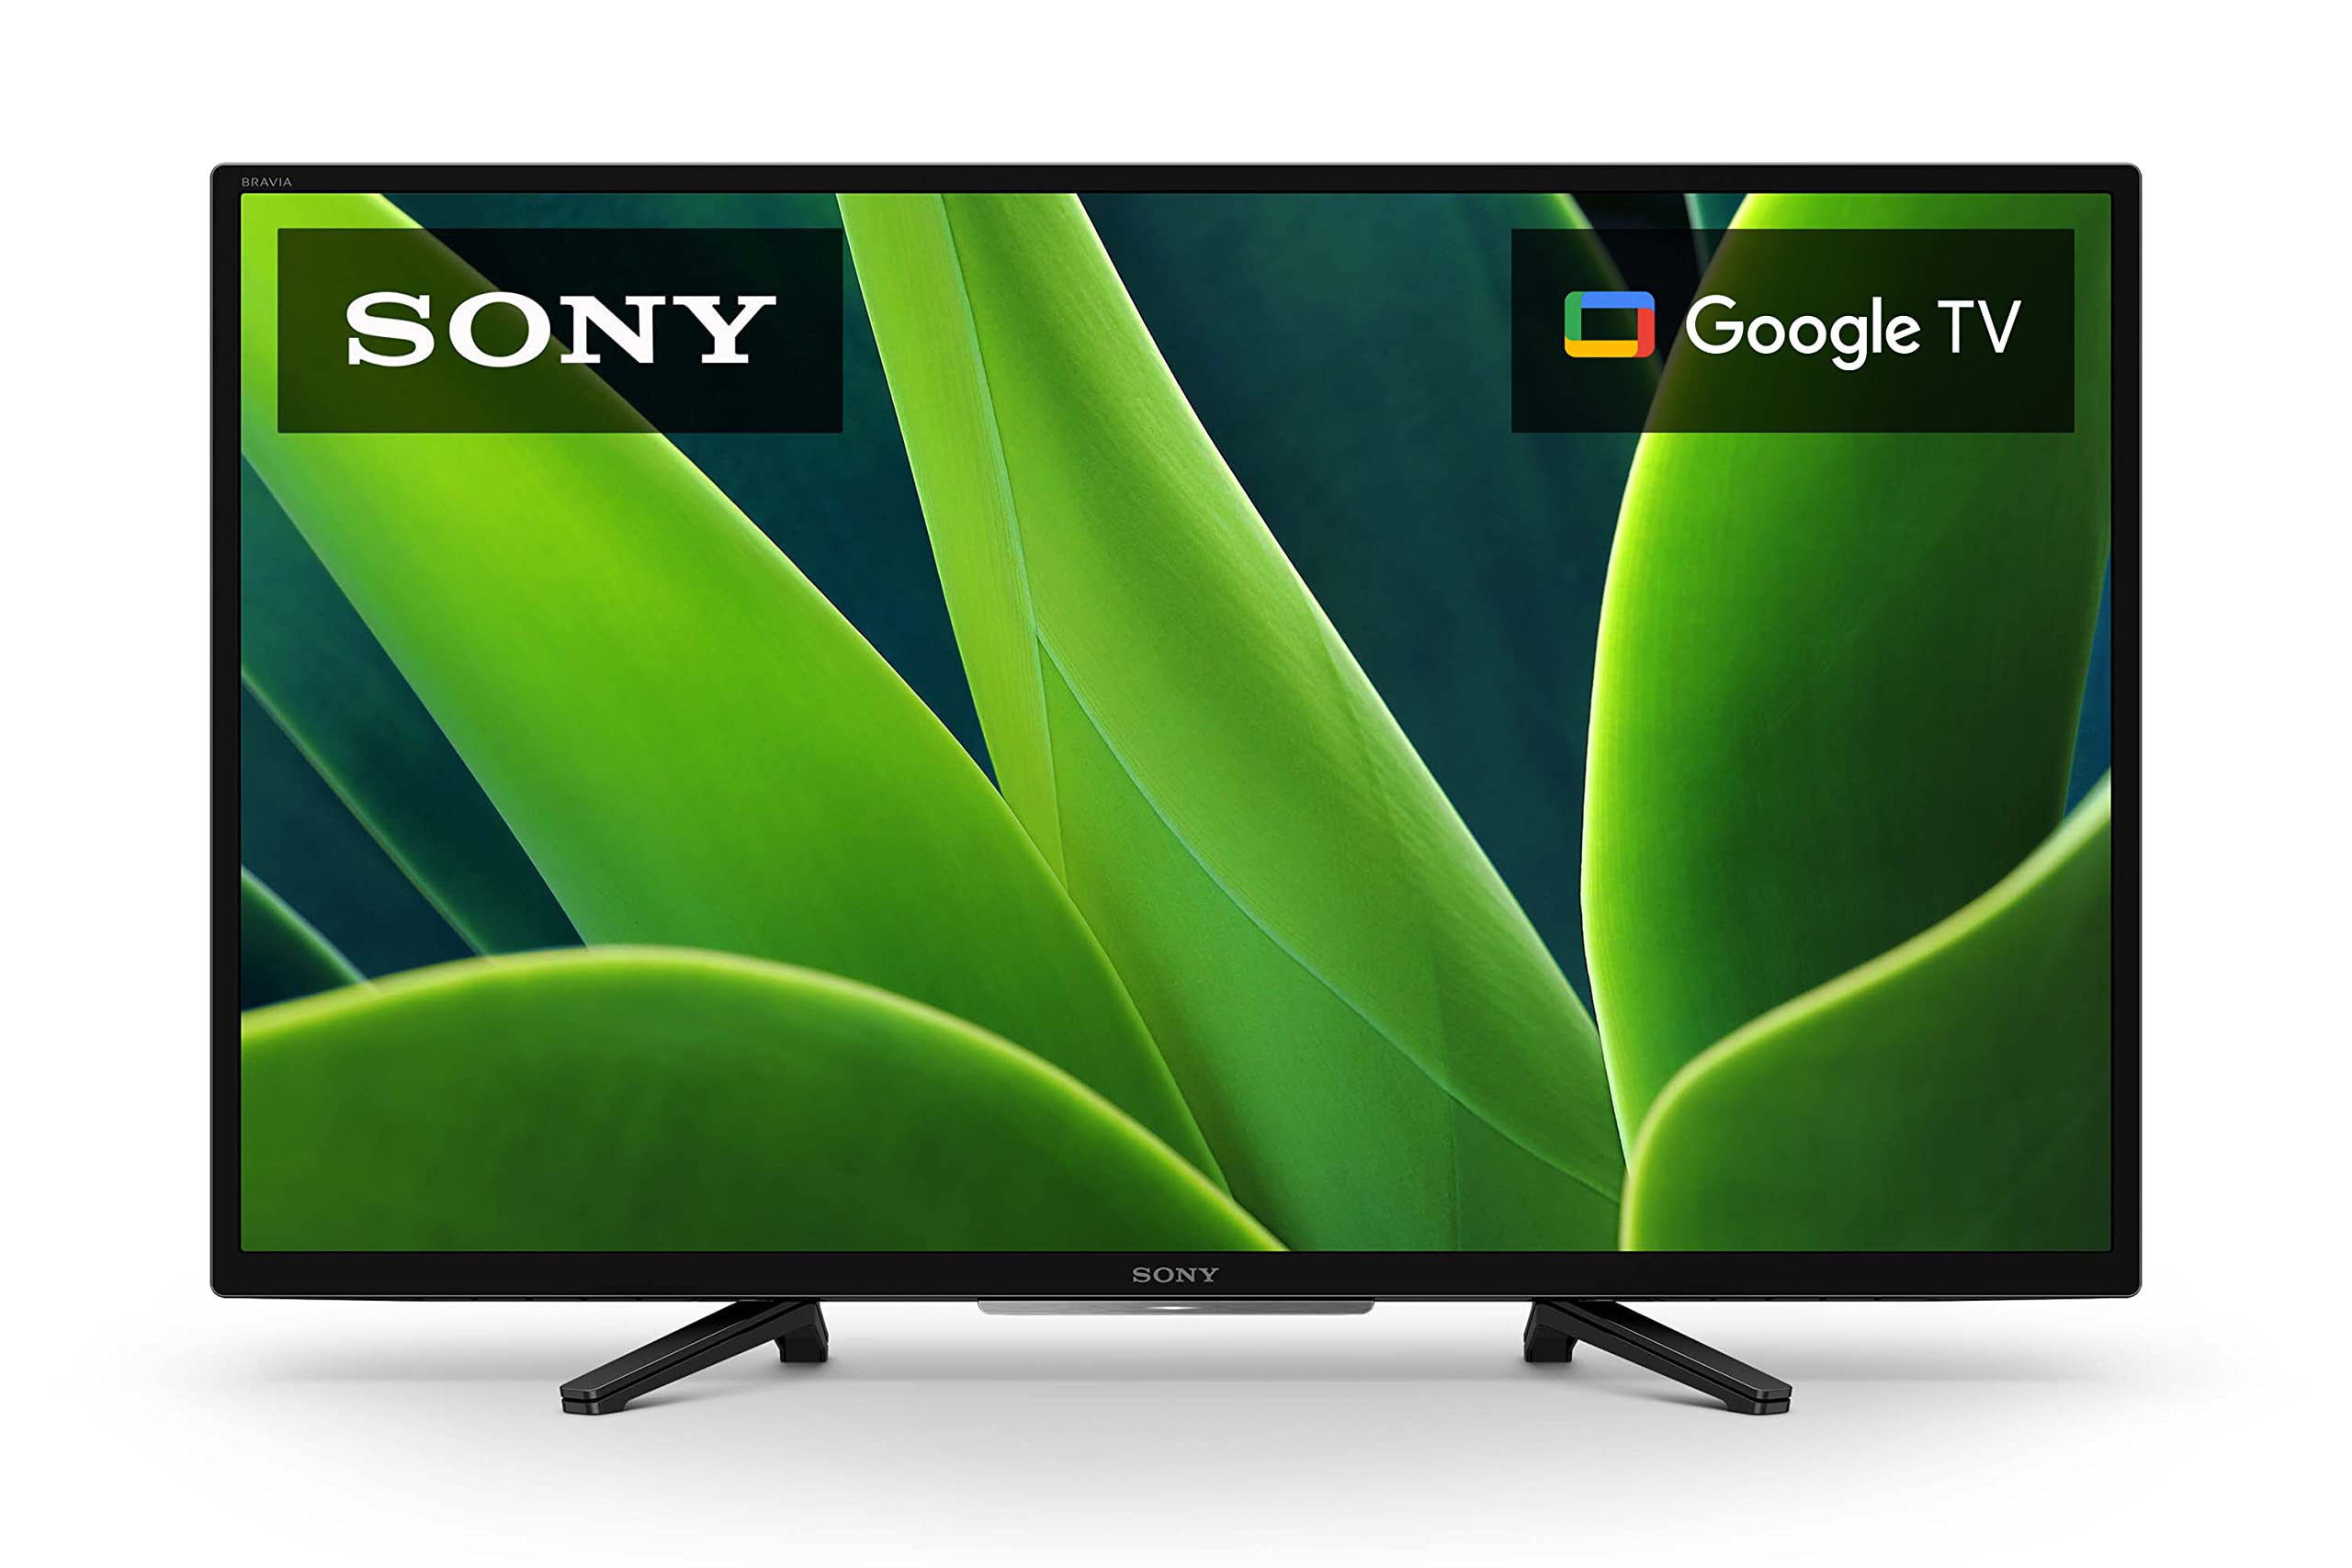 Sony 32-Zoll-720p-HD-LED-HDR-Fernseher der W830K-Serie mit Google TV und Google Assistant – Modell 2022